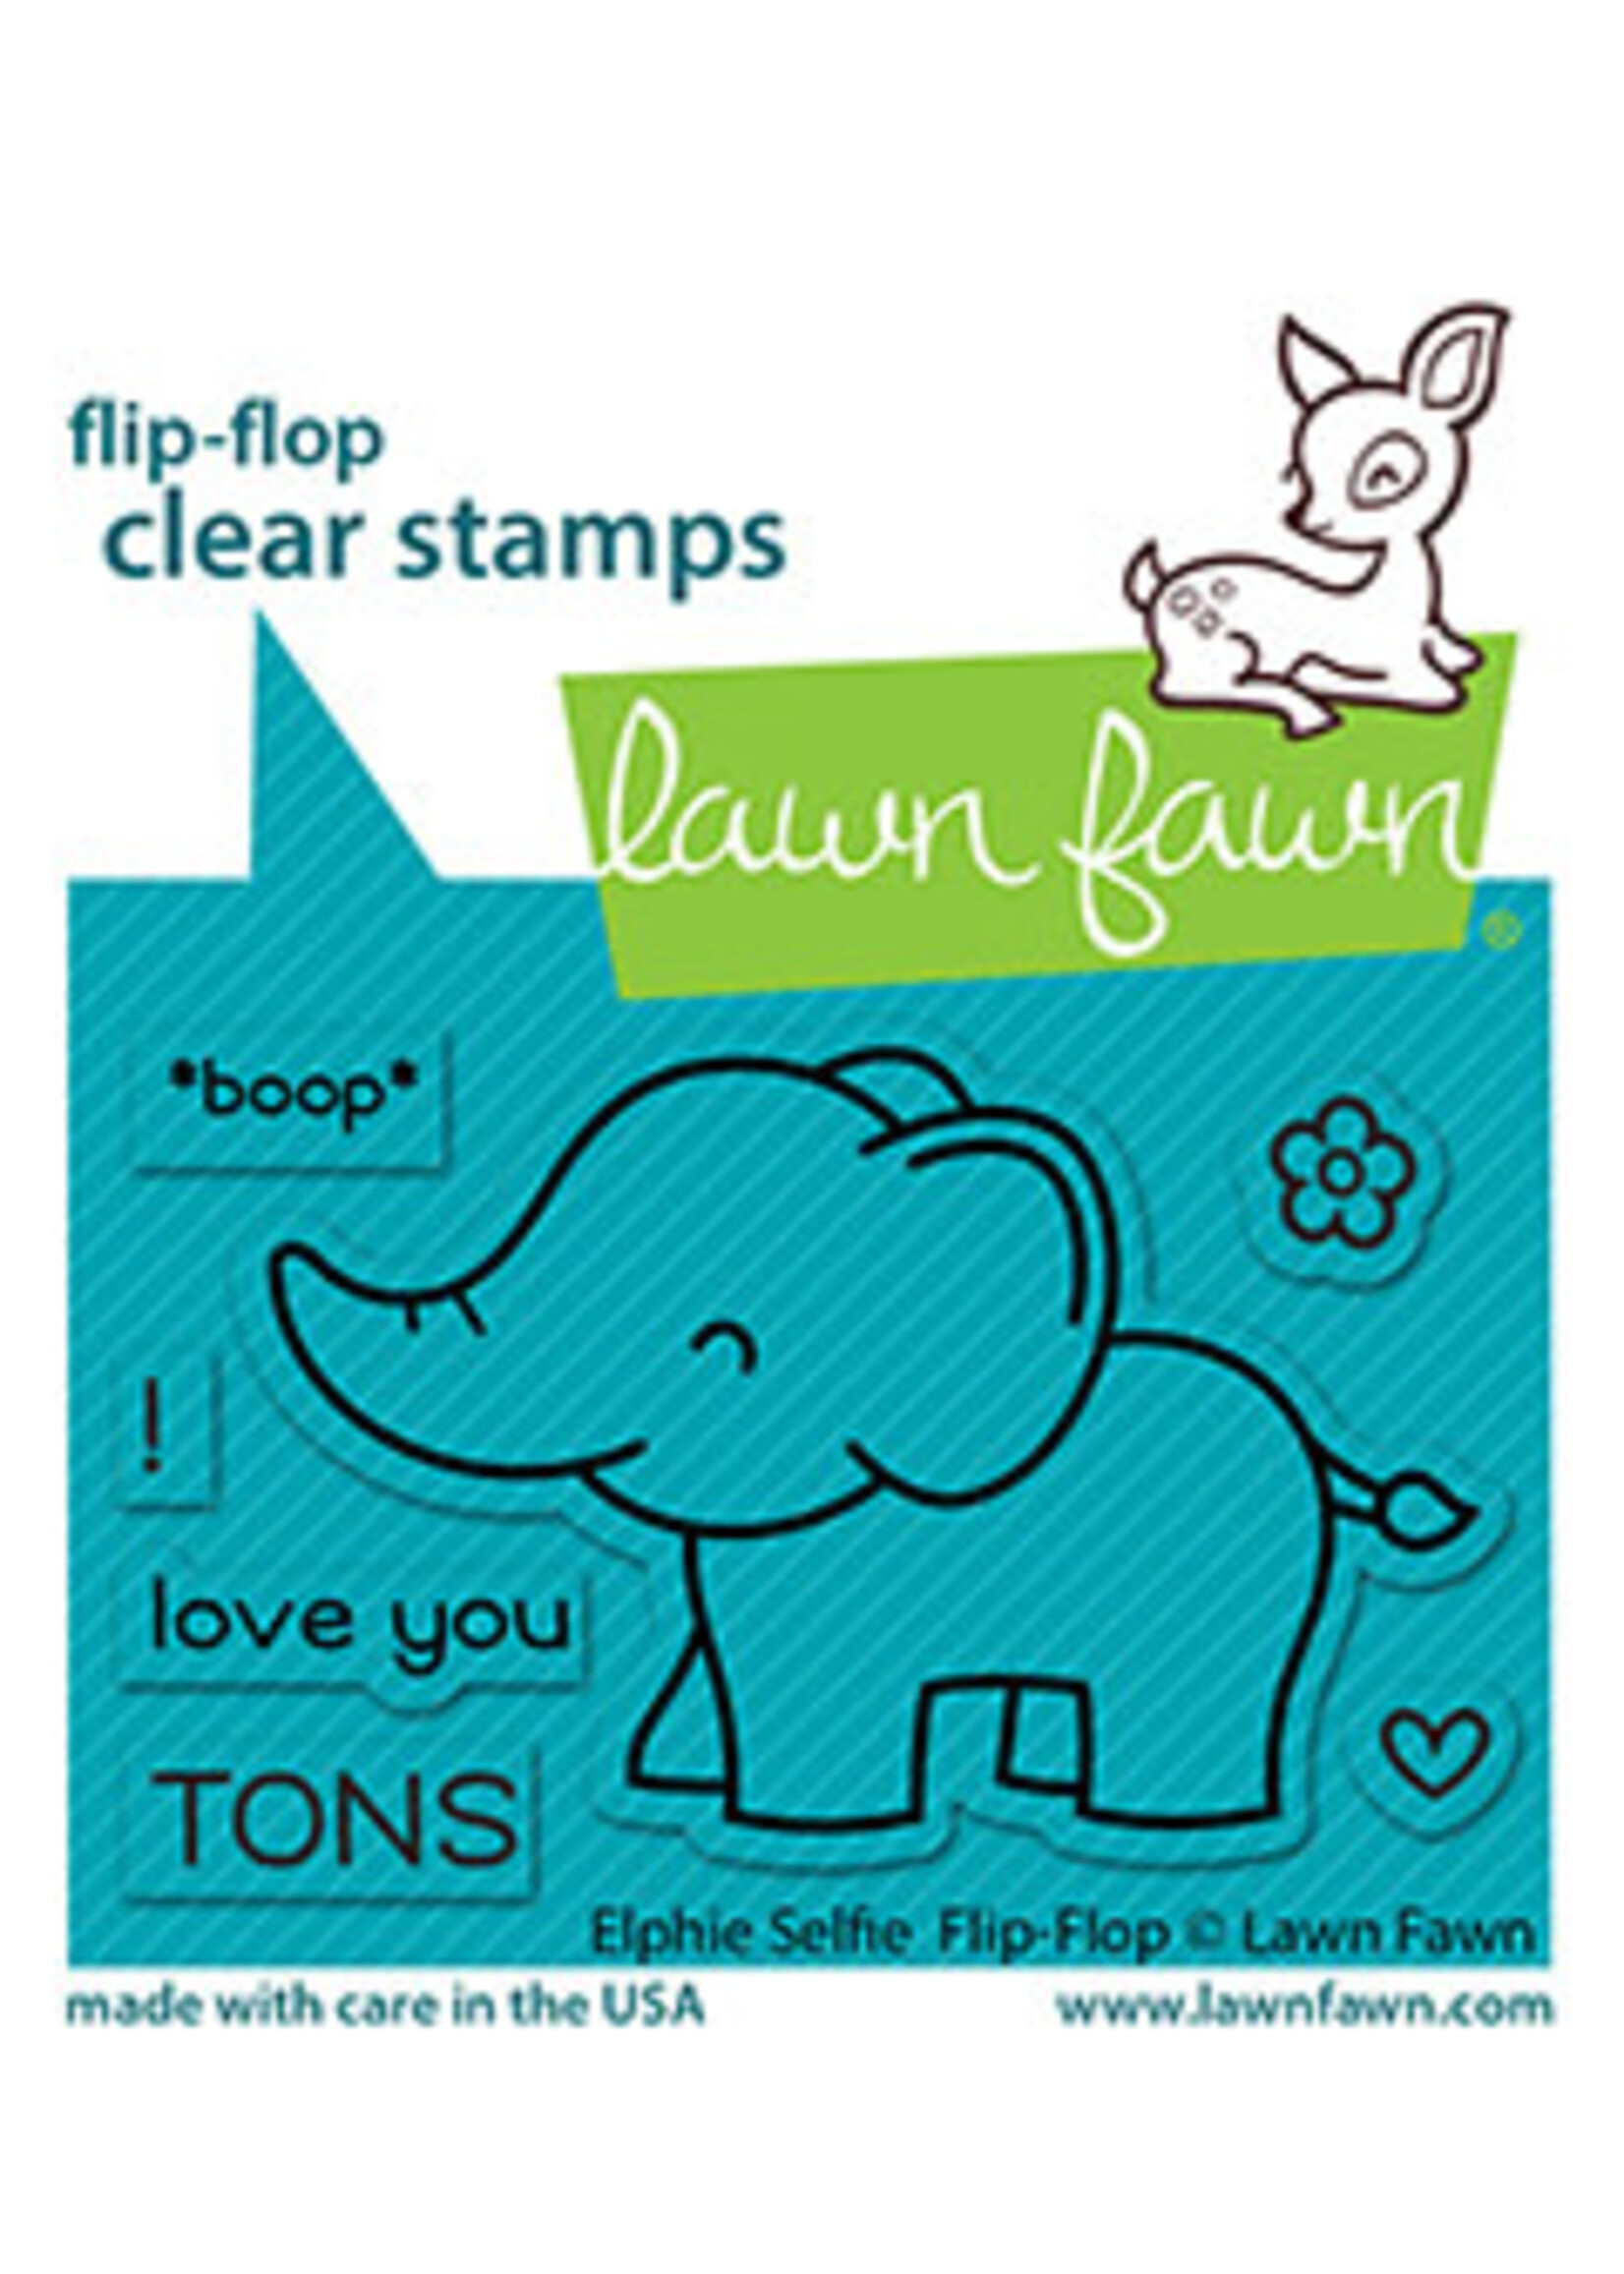 Lawn Fawn elphie selfie flip-flop stamp